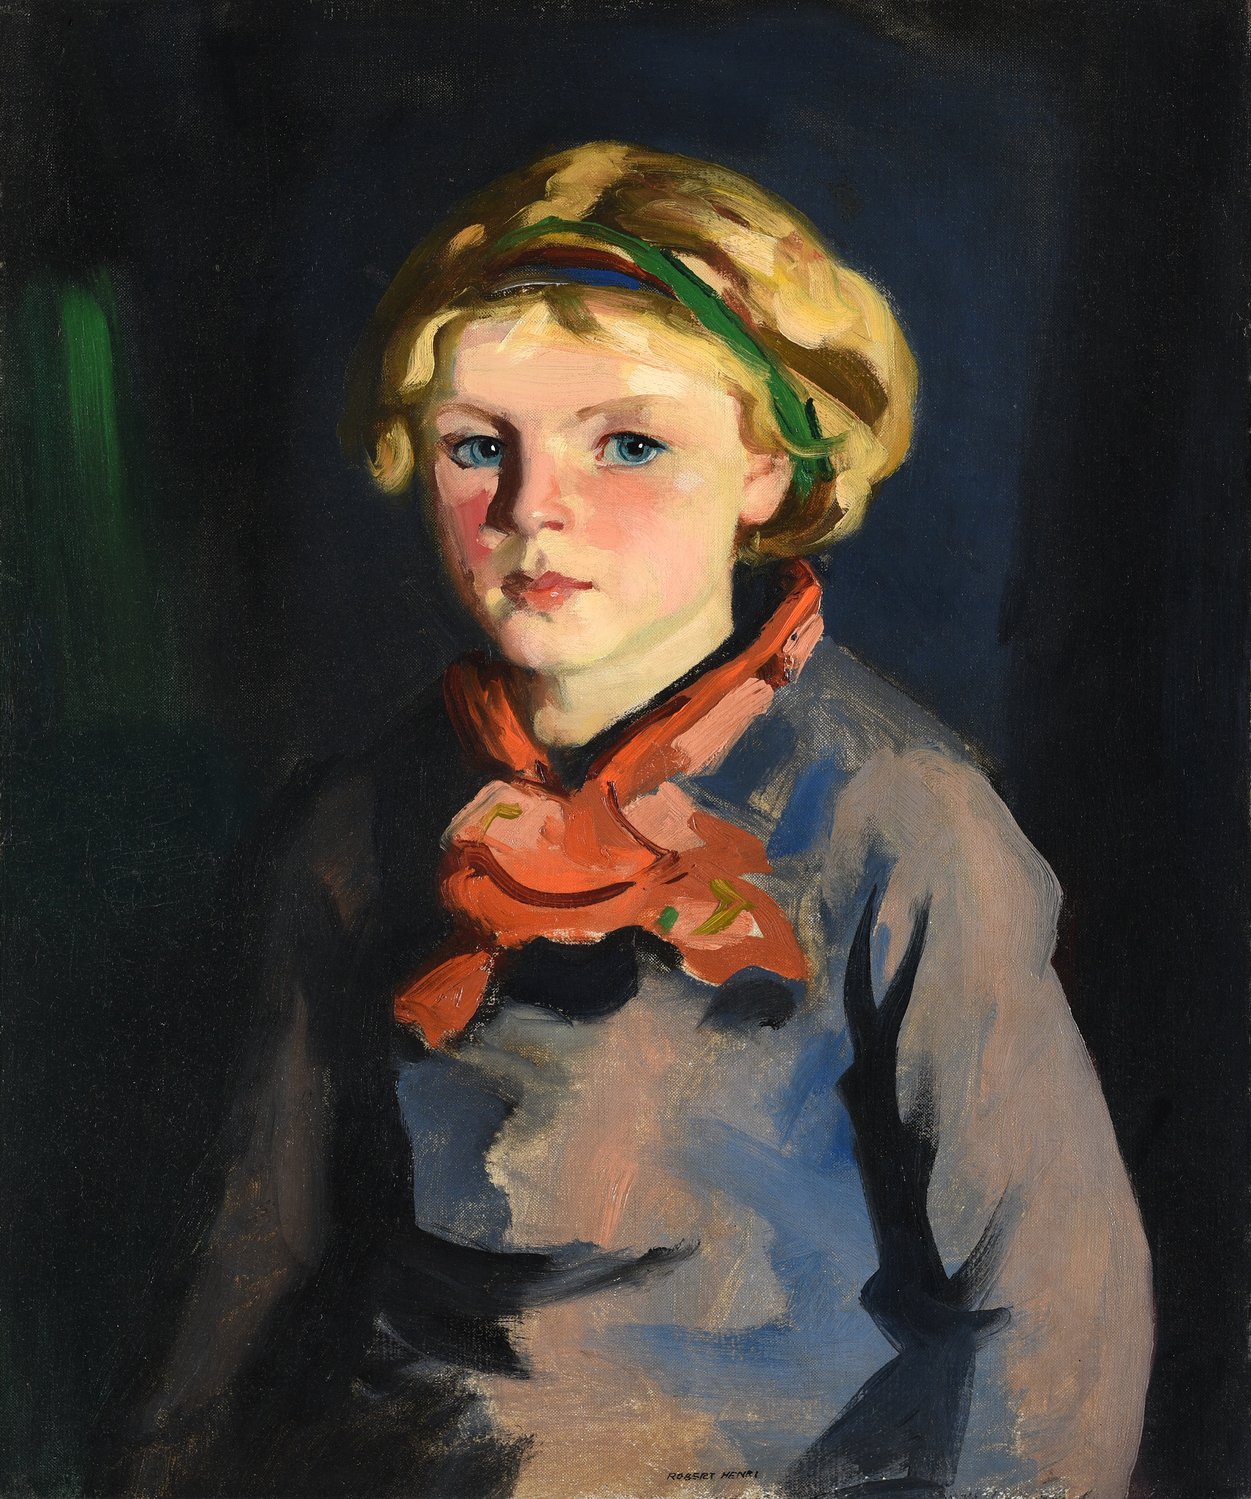 Robert Henri’s “Kathleen,” painted in oil on board in 1924.